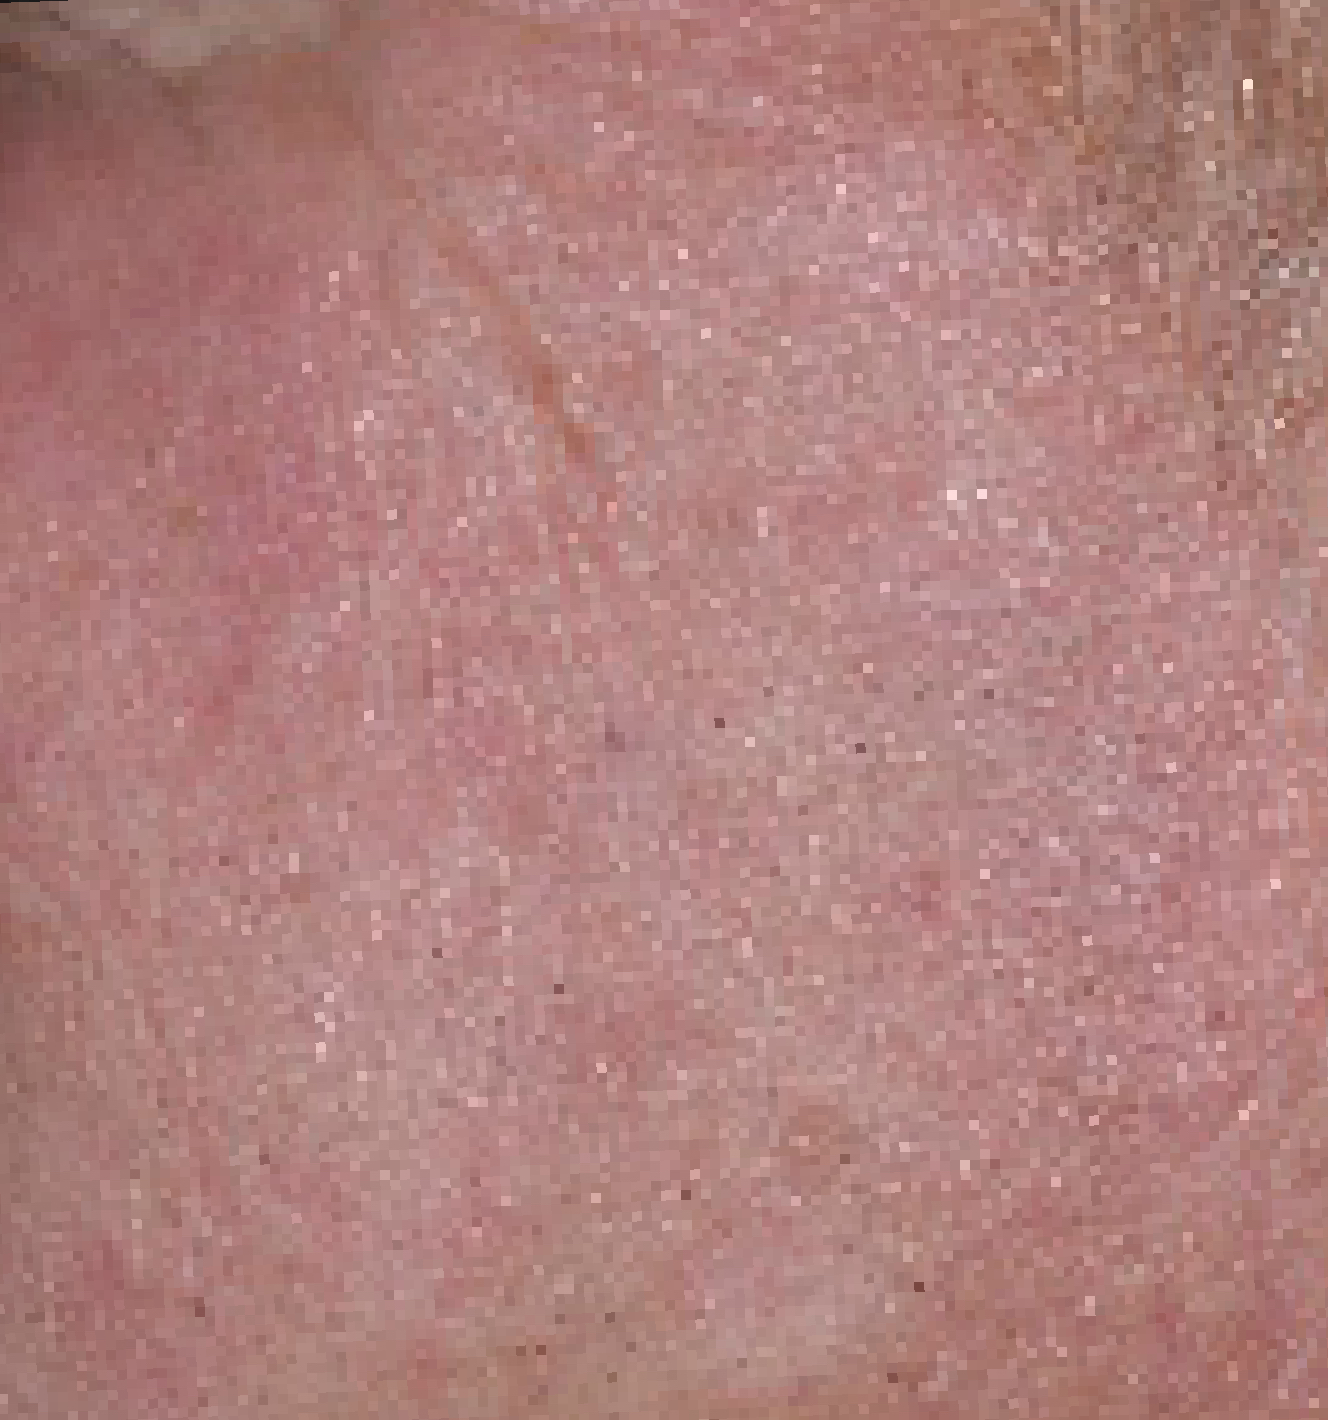 skin image after treatment with Klisyri